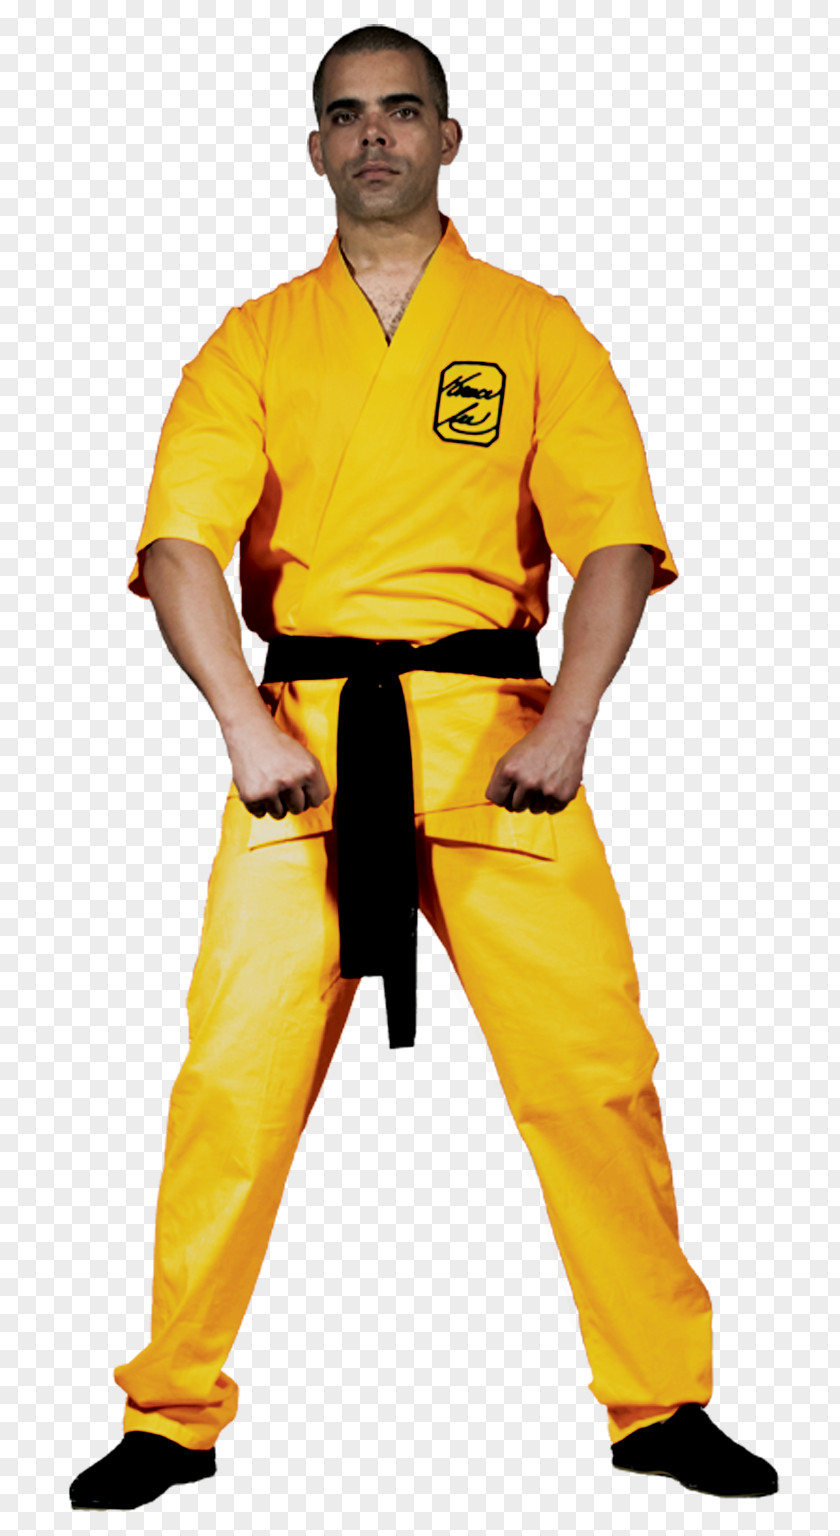 Bruce Lee Karate Gi Uniform Clothing Costume PNG